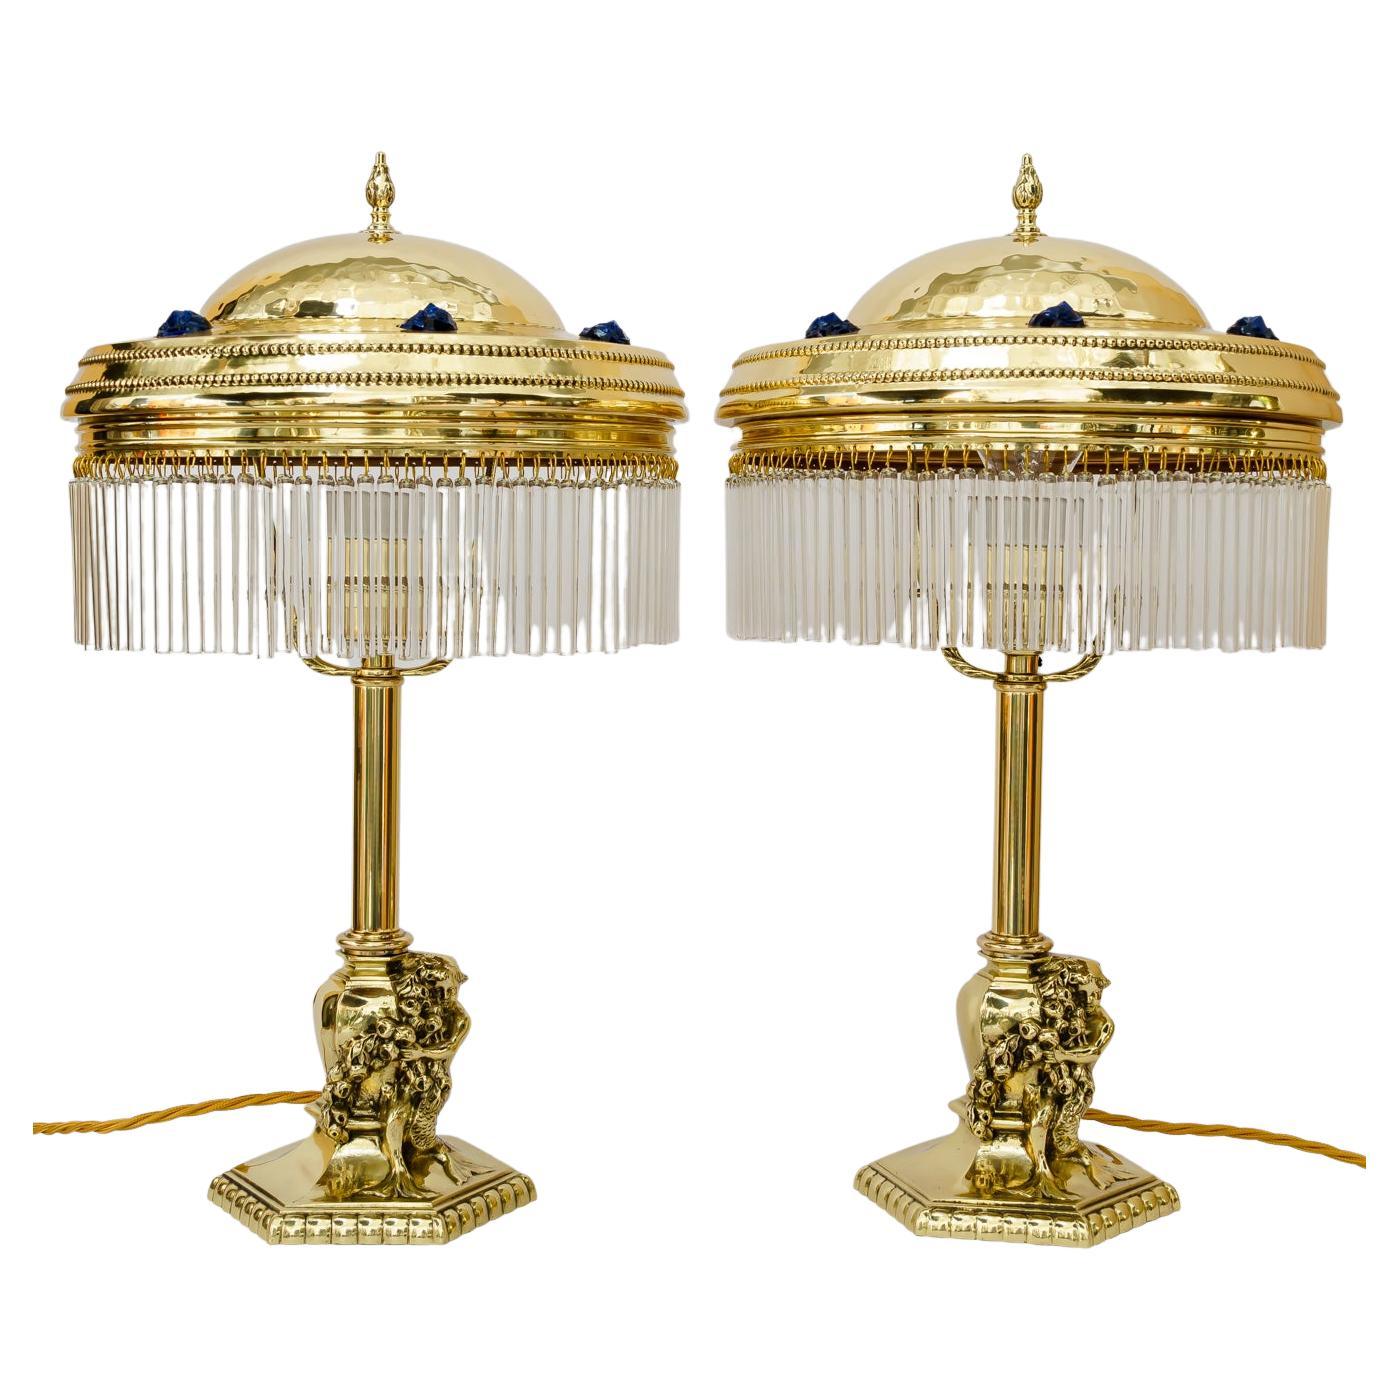 2 lampes de table jugendstil viennoises datant d'environ 1908